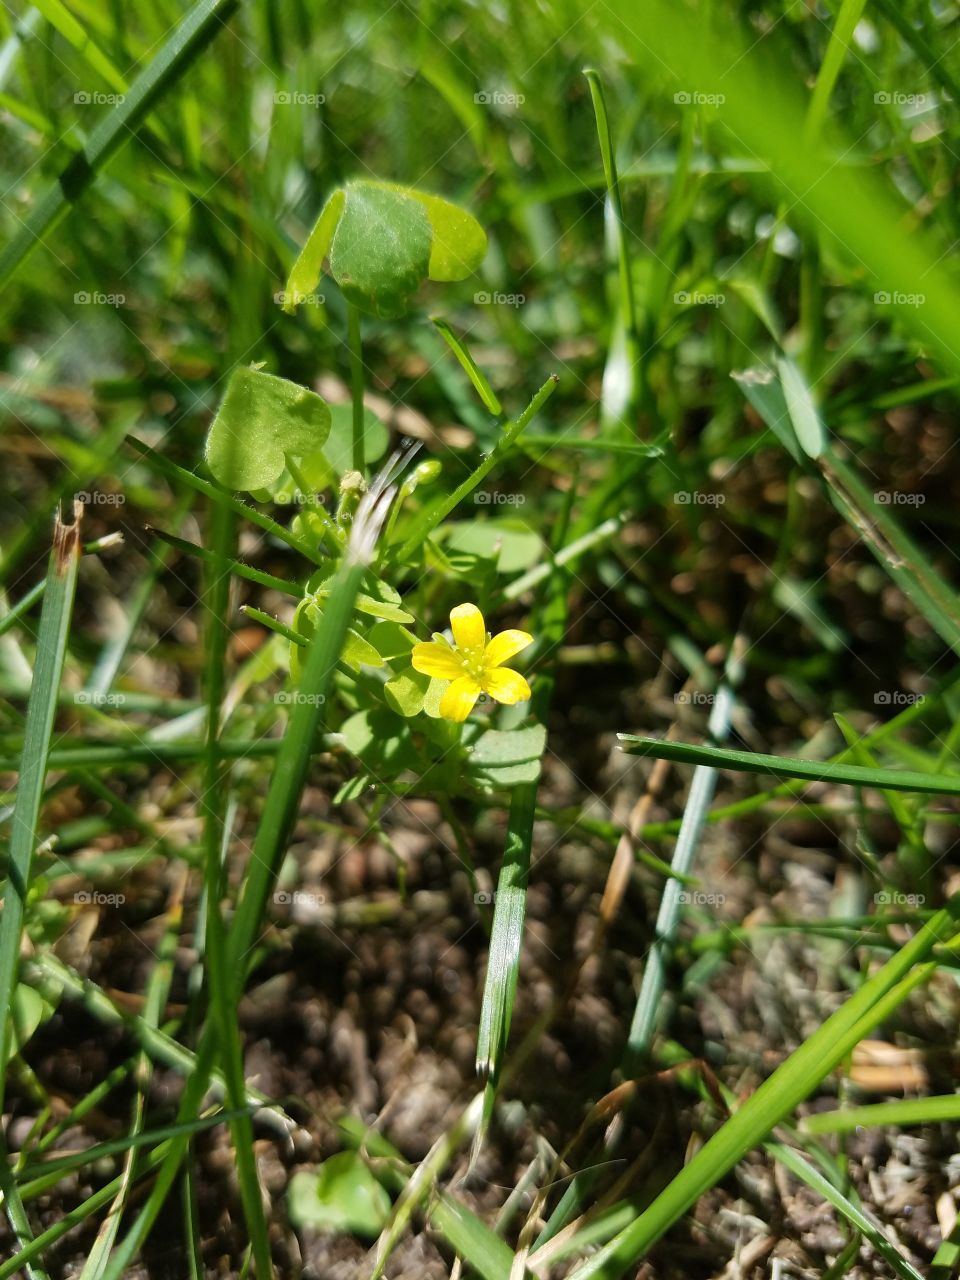 Little yellow flower in the grass